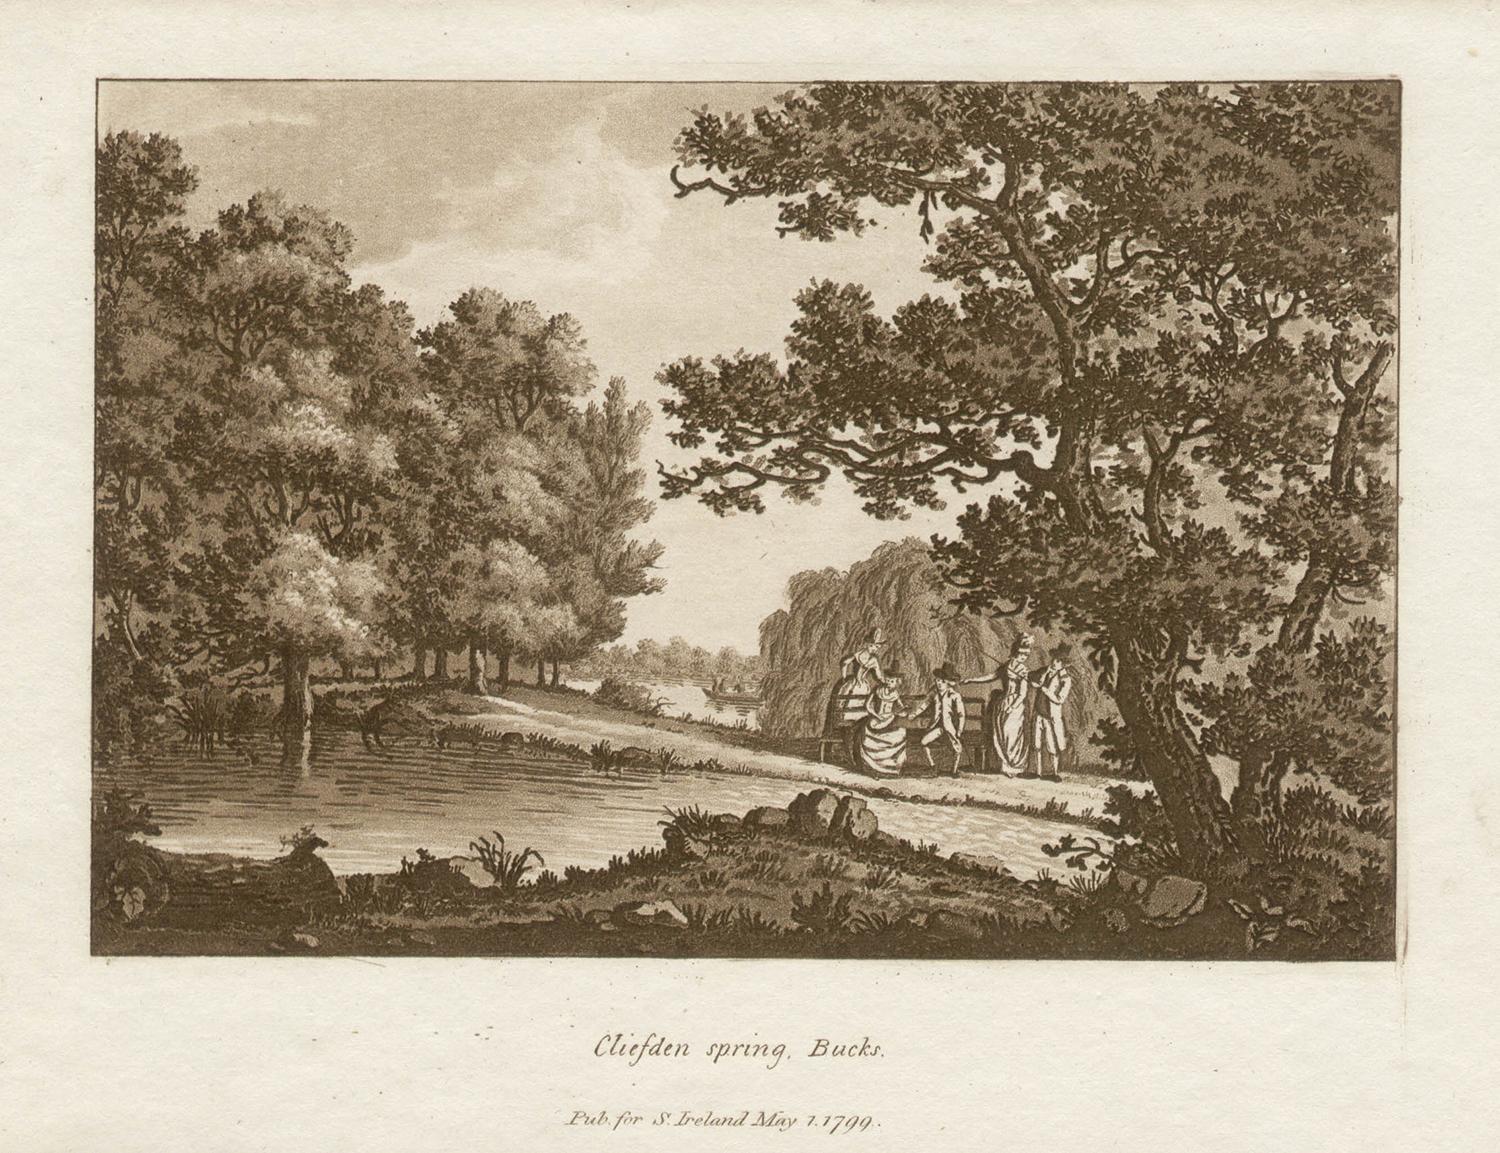 Cliveden spring, Bucks, Thames, late 18th century English sepia aquatint, 1799